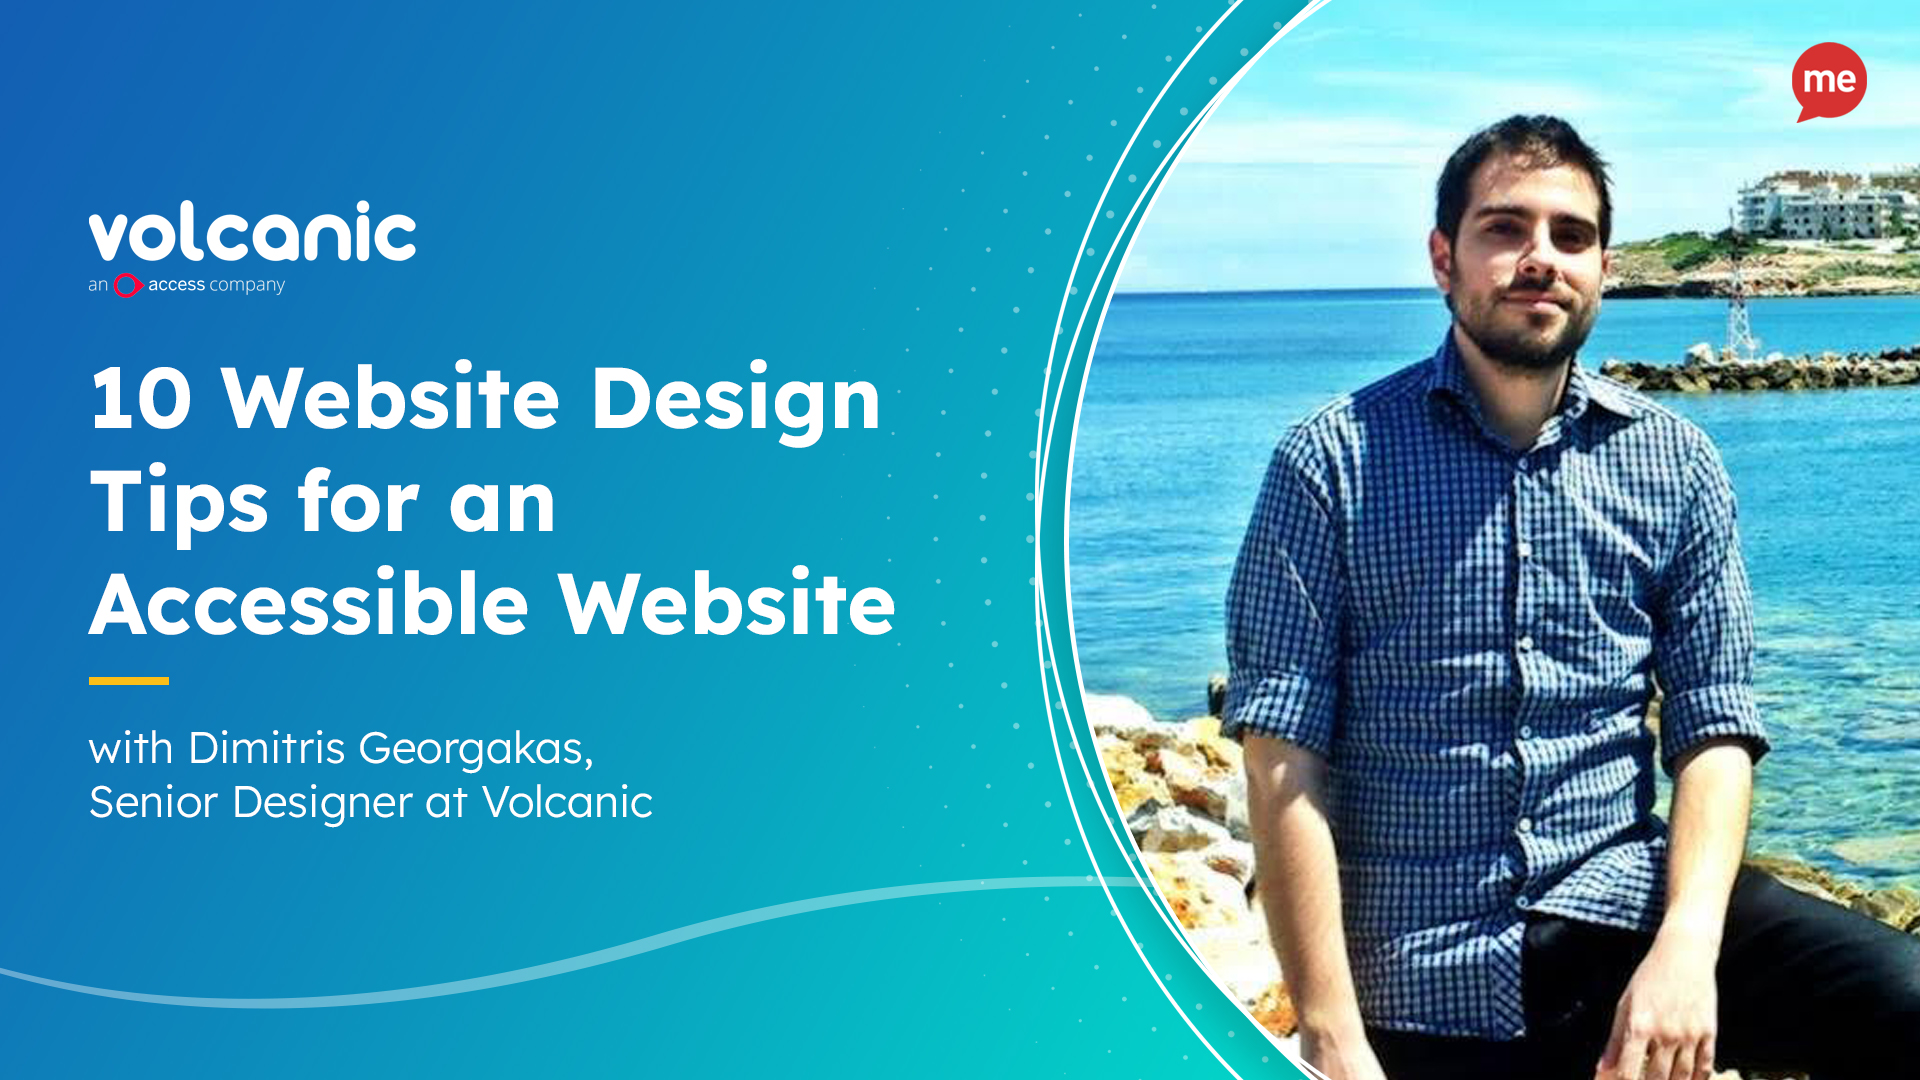 10 Website Design Tips for an Accessible Website, with Dimitris Georgakas, Senior Designer at Volcanic